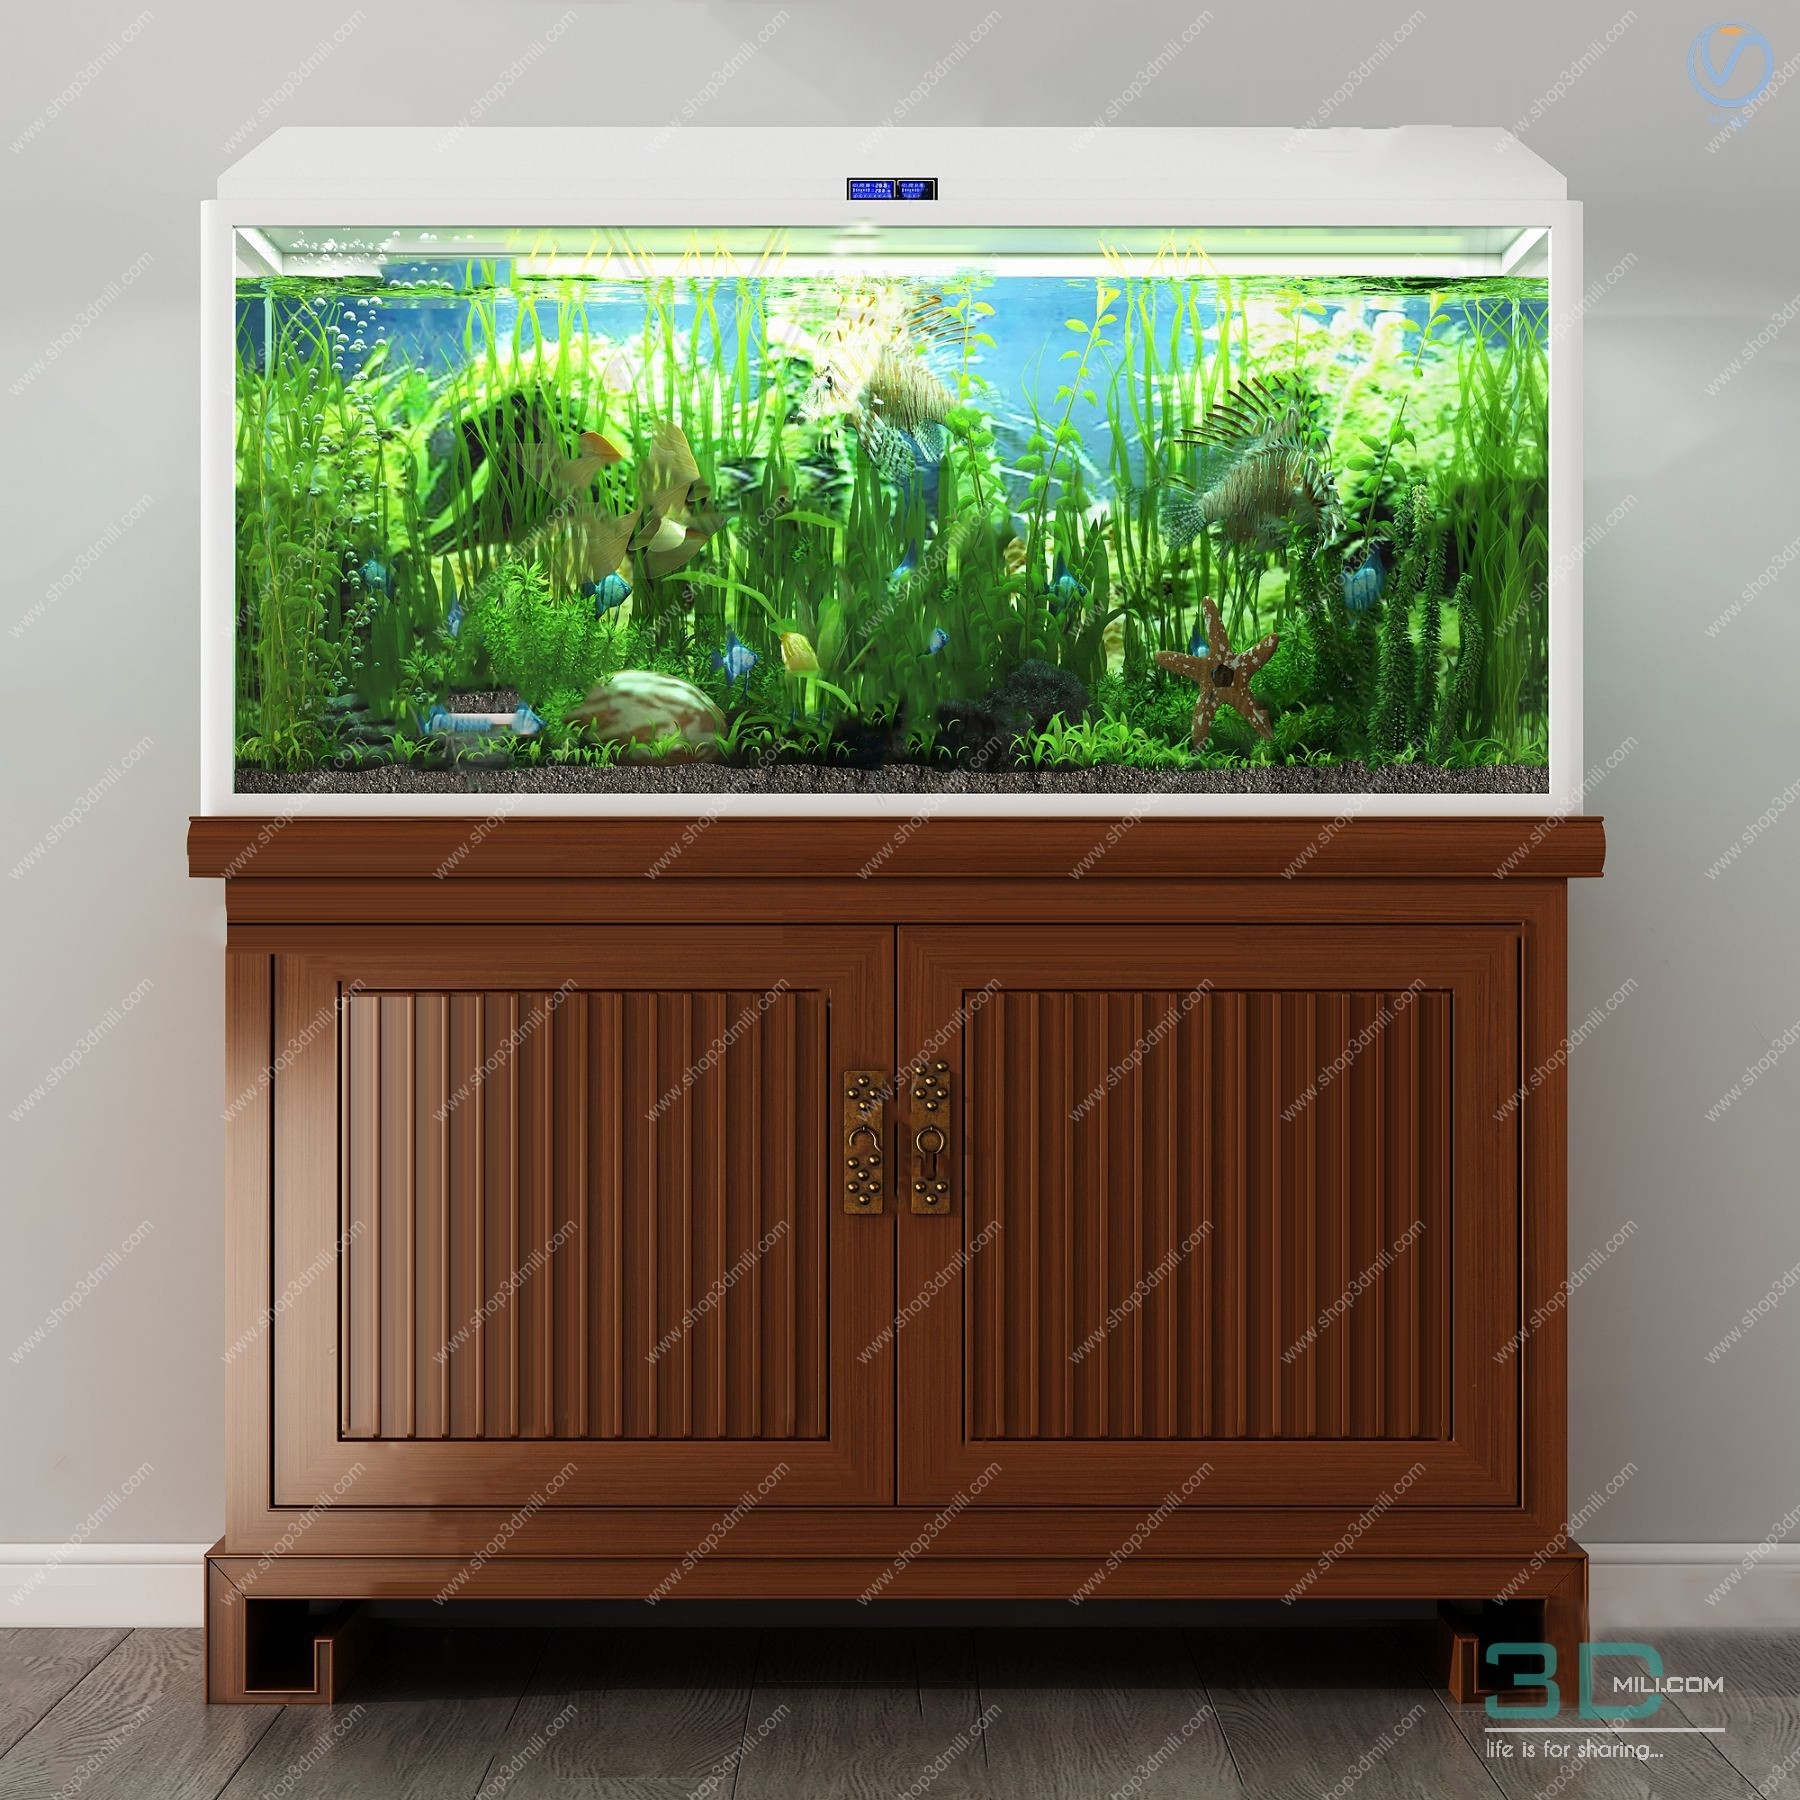 596. Sell Album Aquarium Fish Tank PRO Vol 1 3ds Max